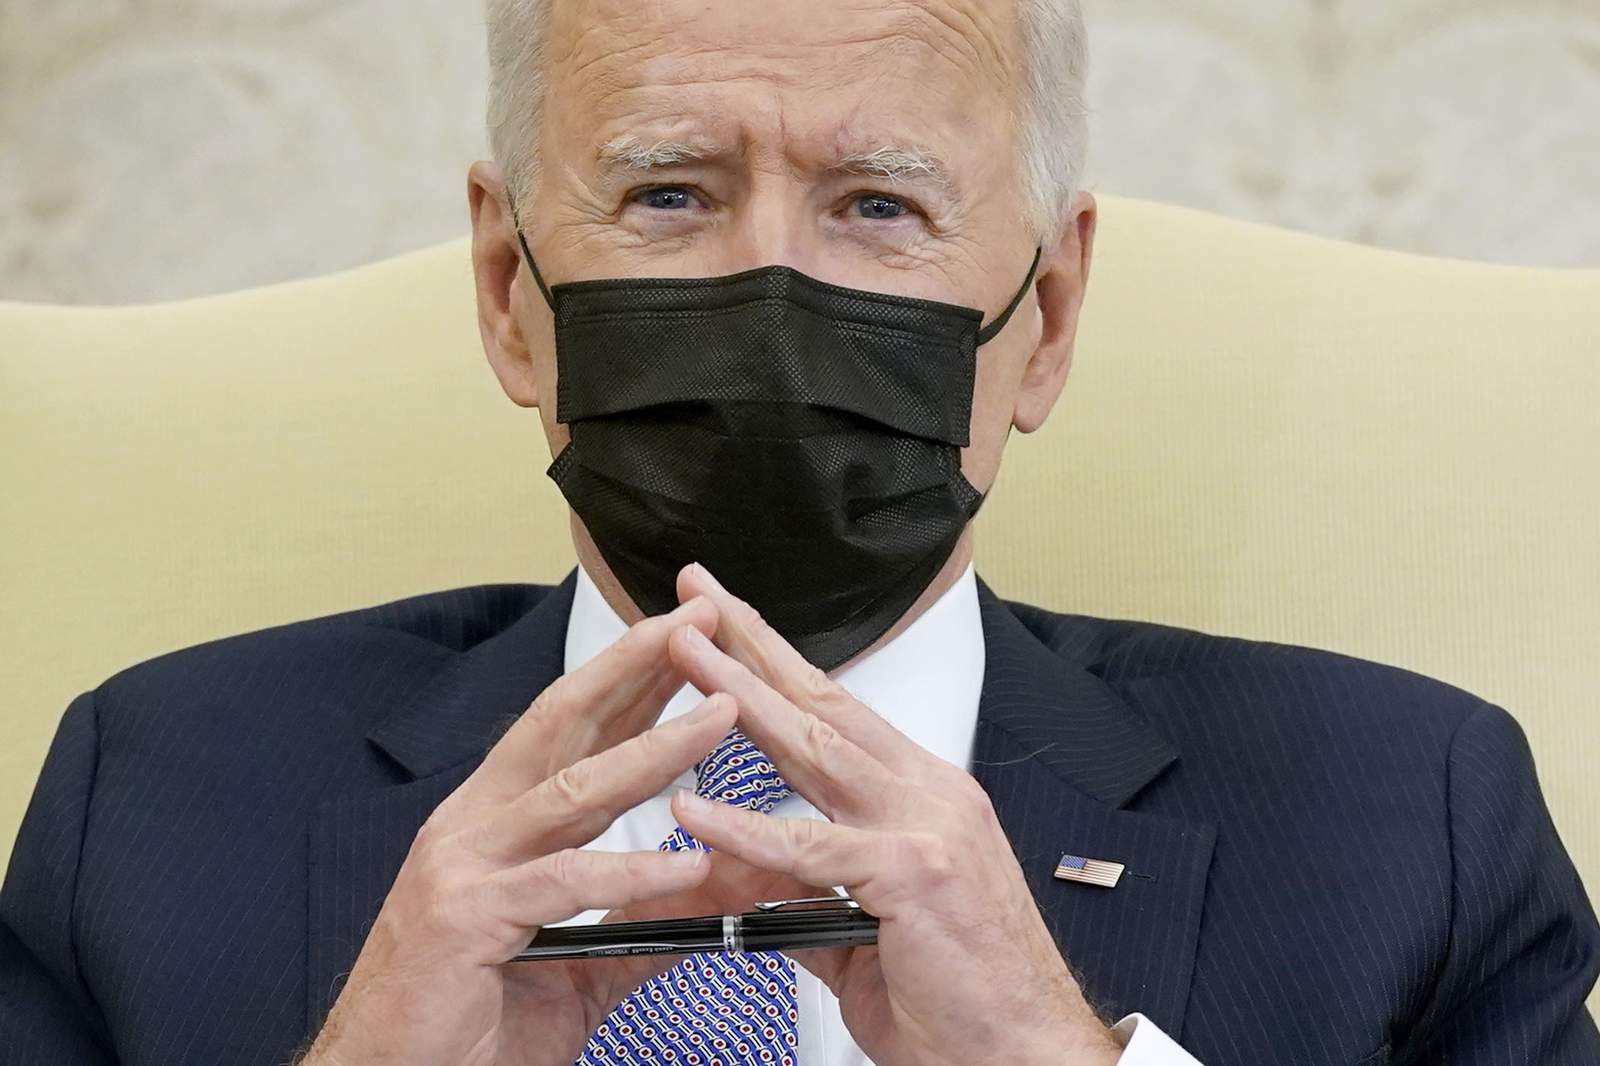 Biden aims for bipartisanship but applies stealthy pressure